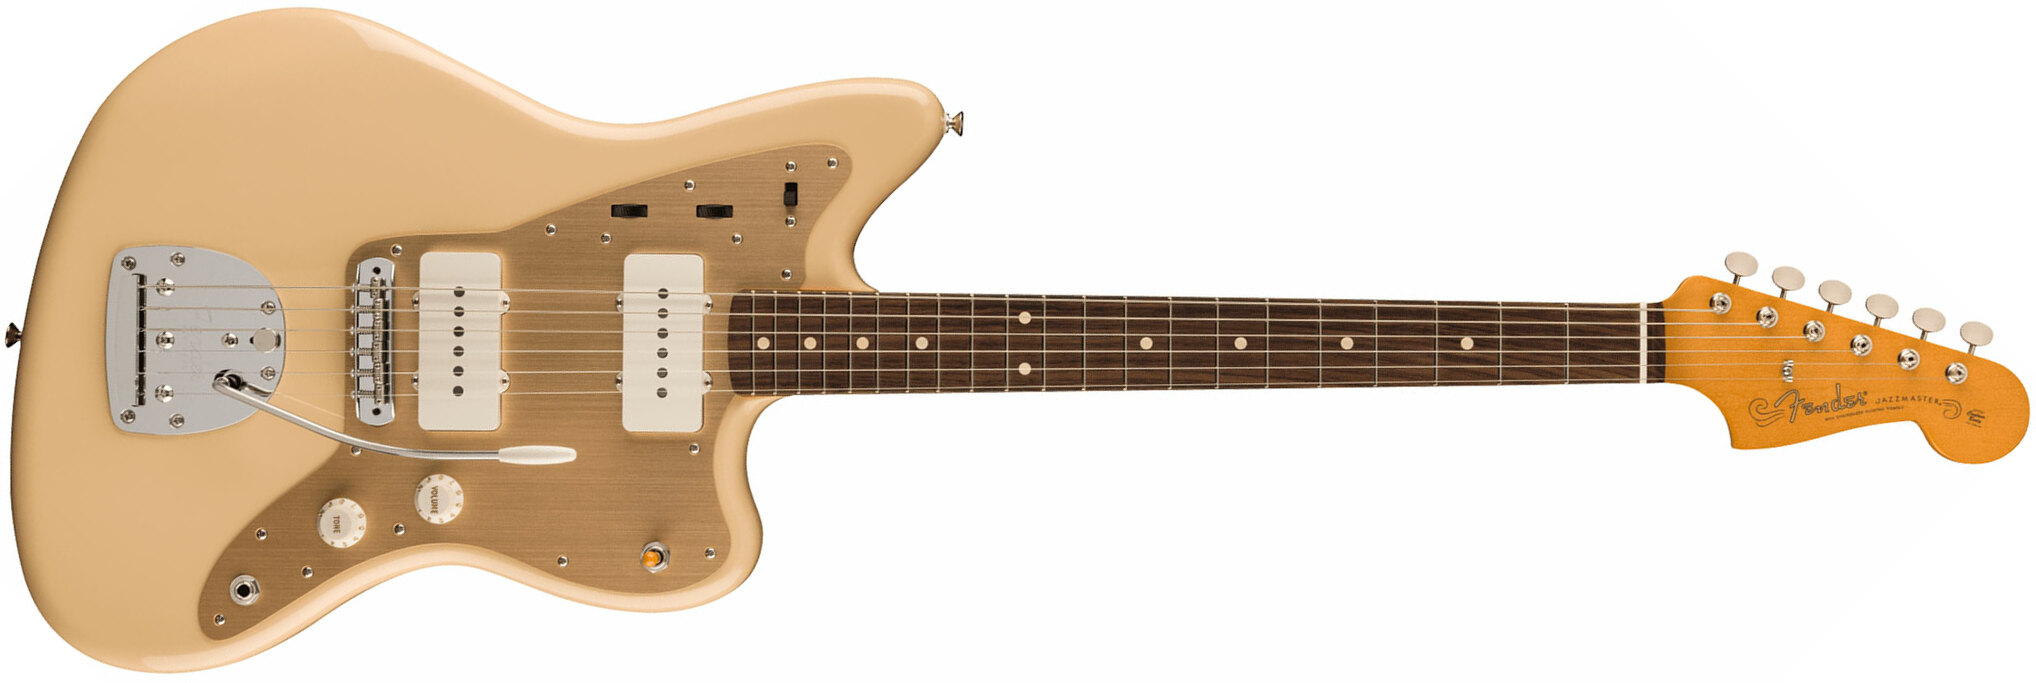 Fender Jazzmaster 50s Vintera 2 Mex 2s Trem Rw - Desert Sand - Retro-Rock-E-Gitarre - Main picture